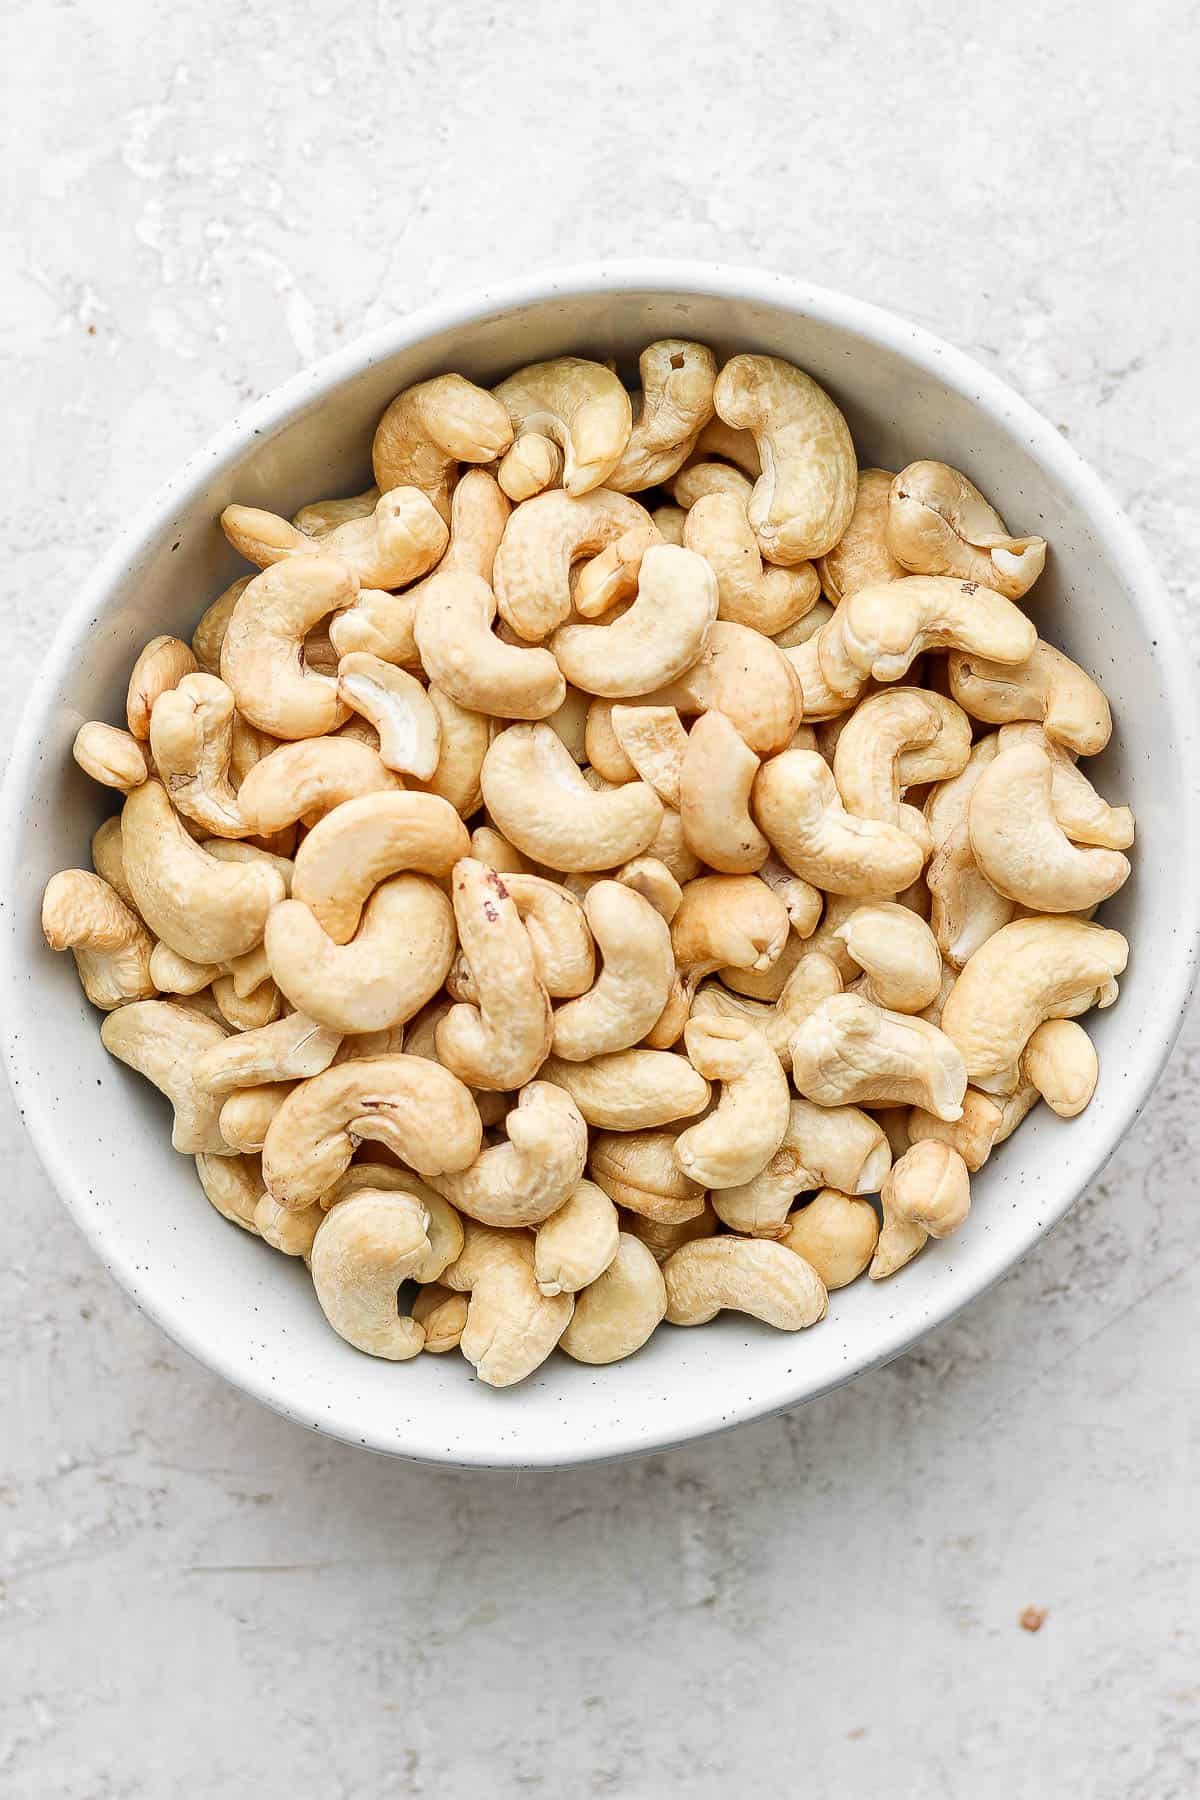 Raw cashews in a small white bowl with dark specks.